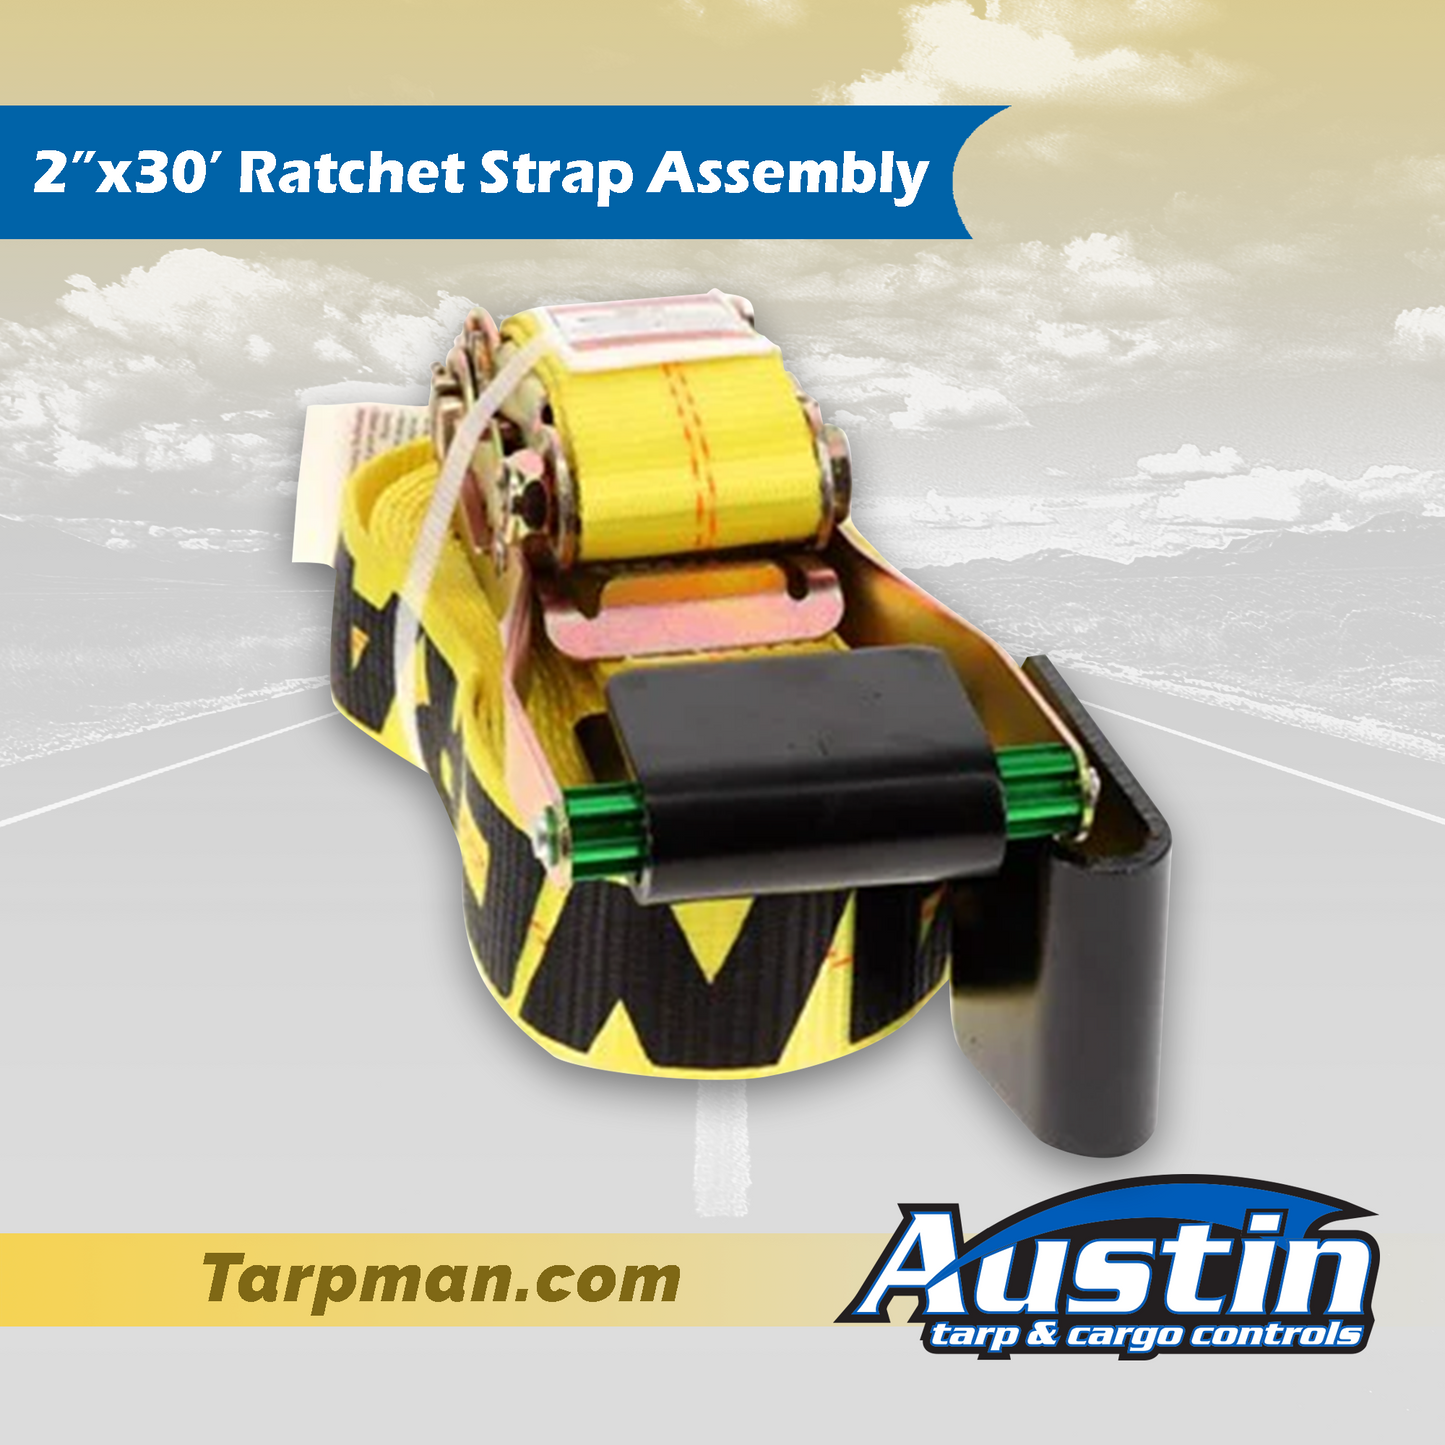 2" x 30' Ratchet Strap Assembly Tarpman.com | Austin Tarp & Cargo Controls